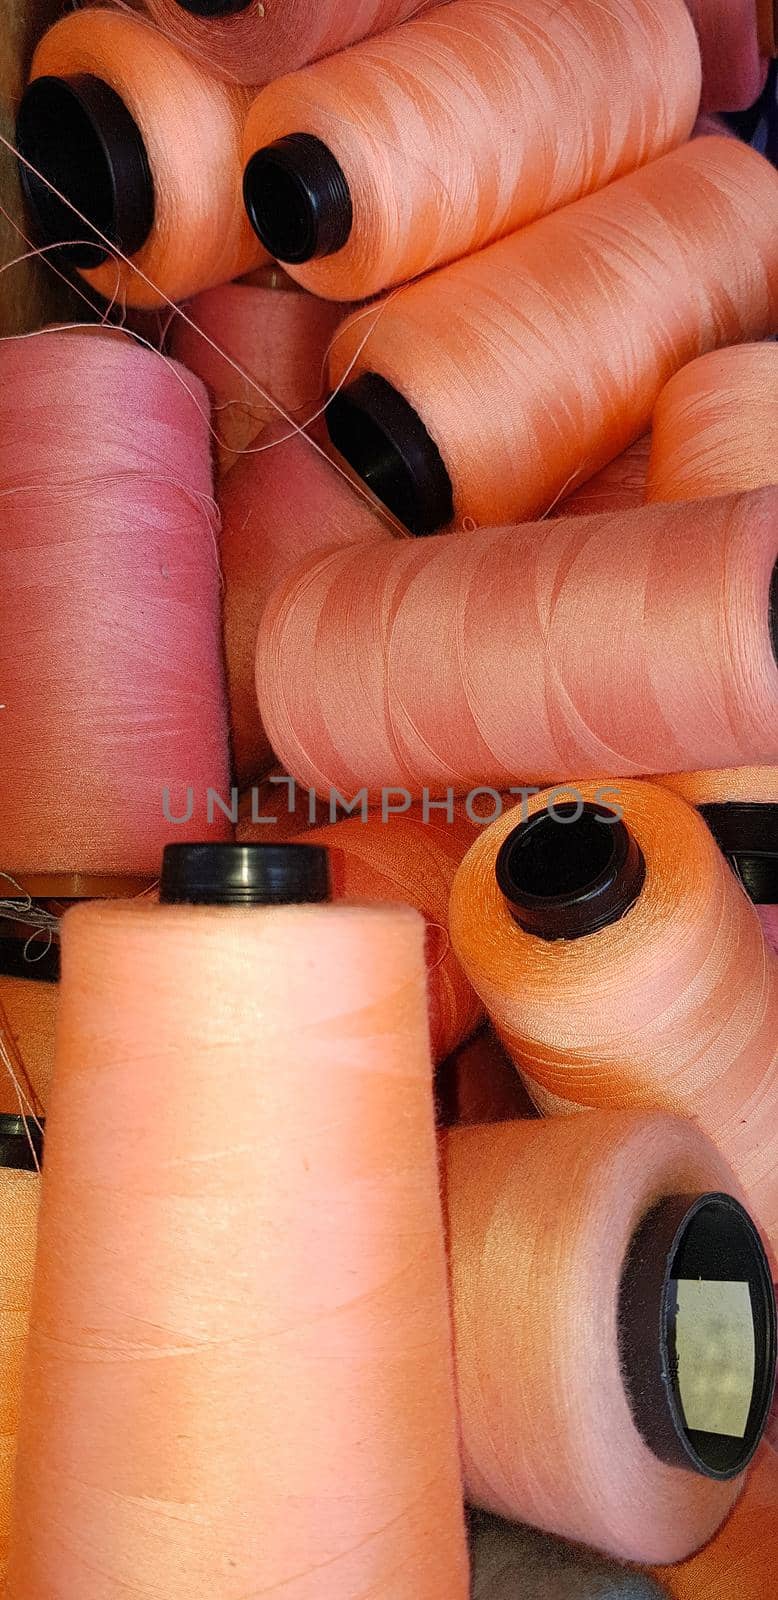 Colorful yarn on spool, yarn on tube, cotton, wool, linen thread orange